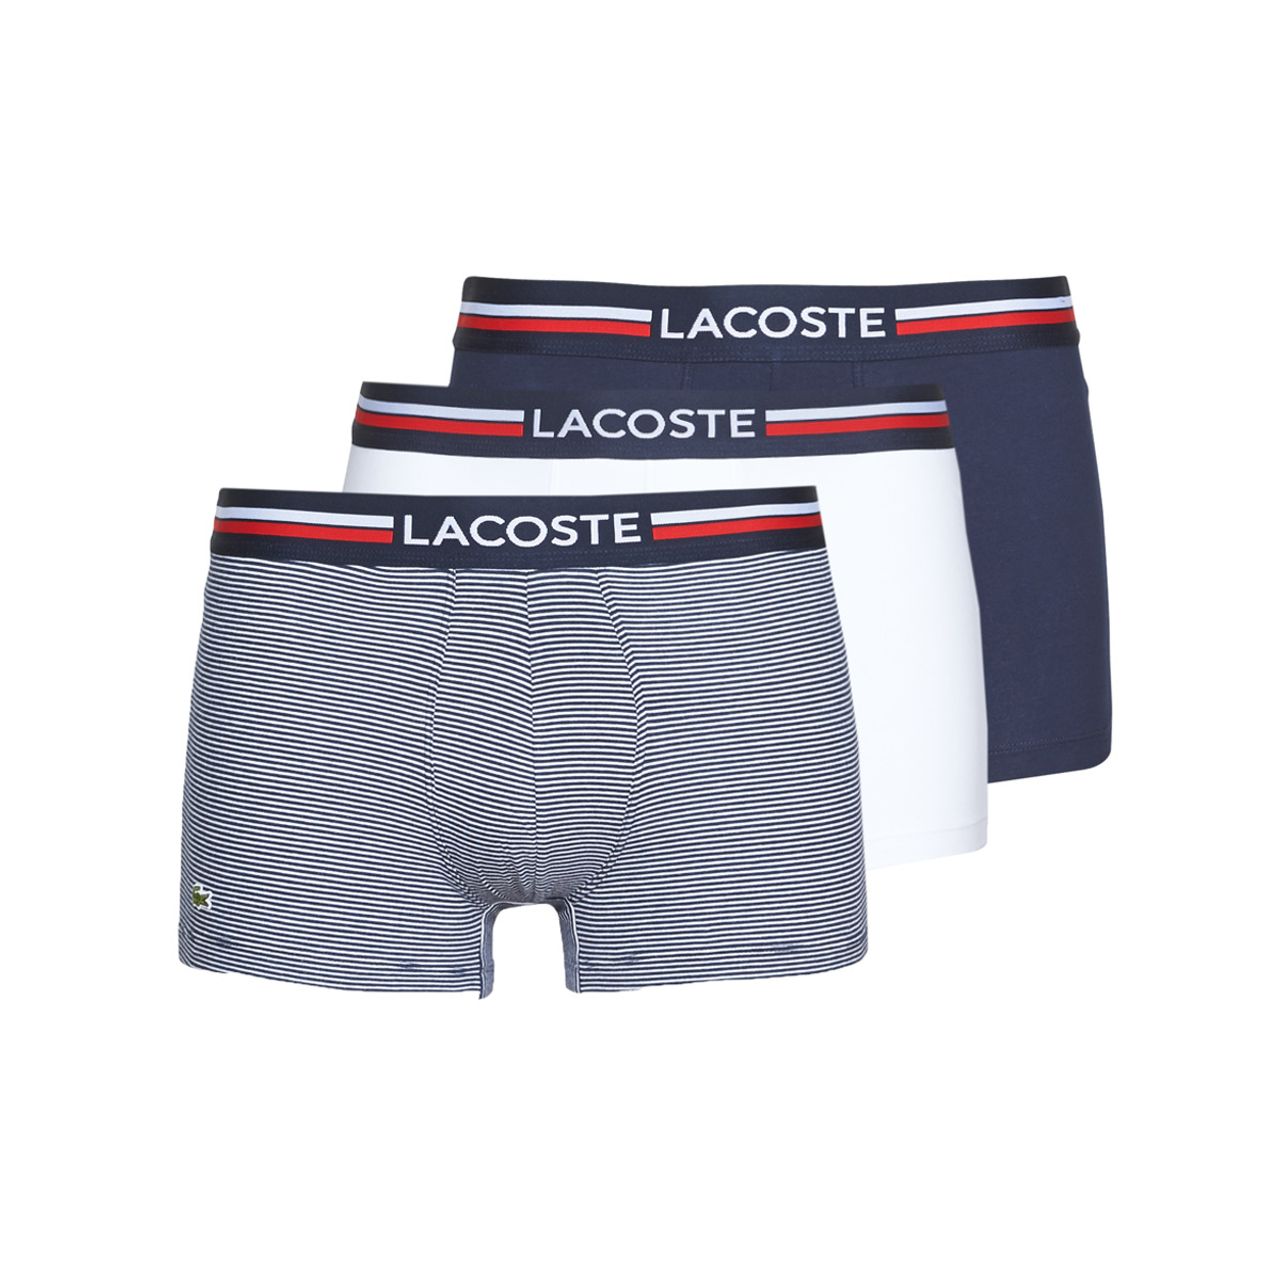 Lacoste Boxer shorts 5H3413-525 (men) - Compare prices